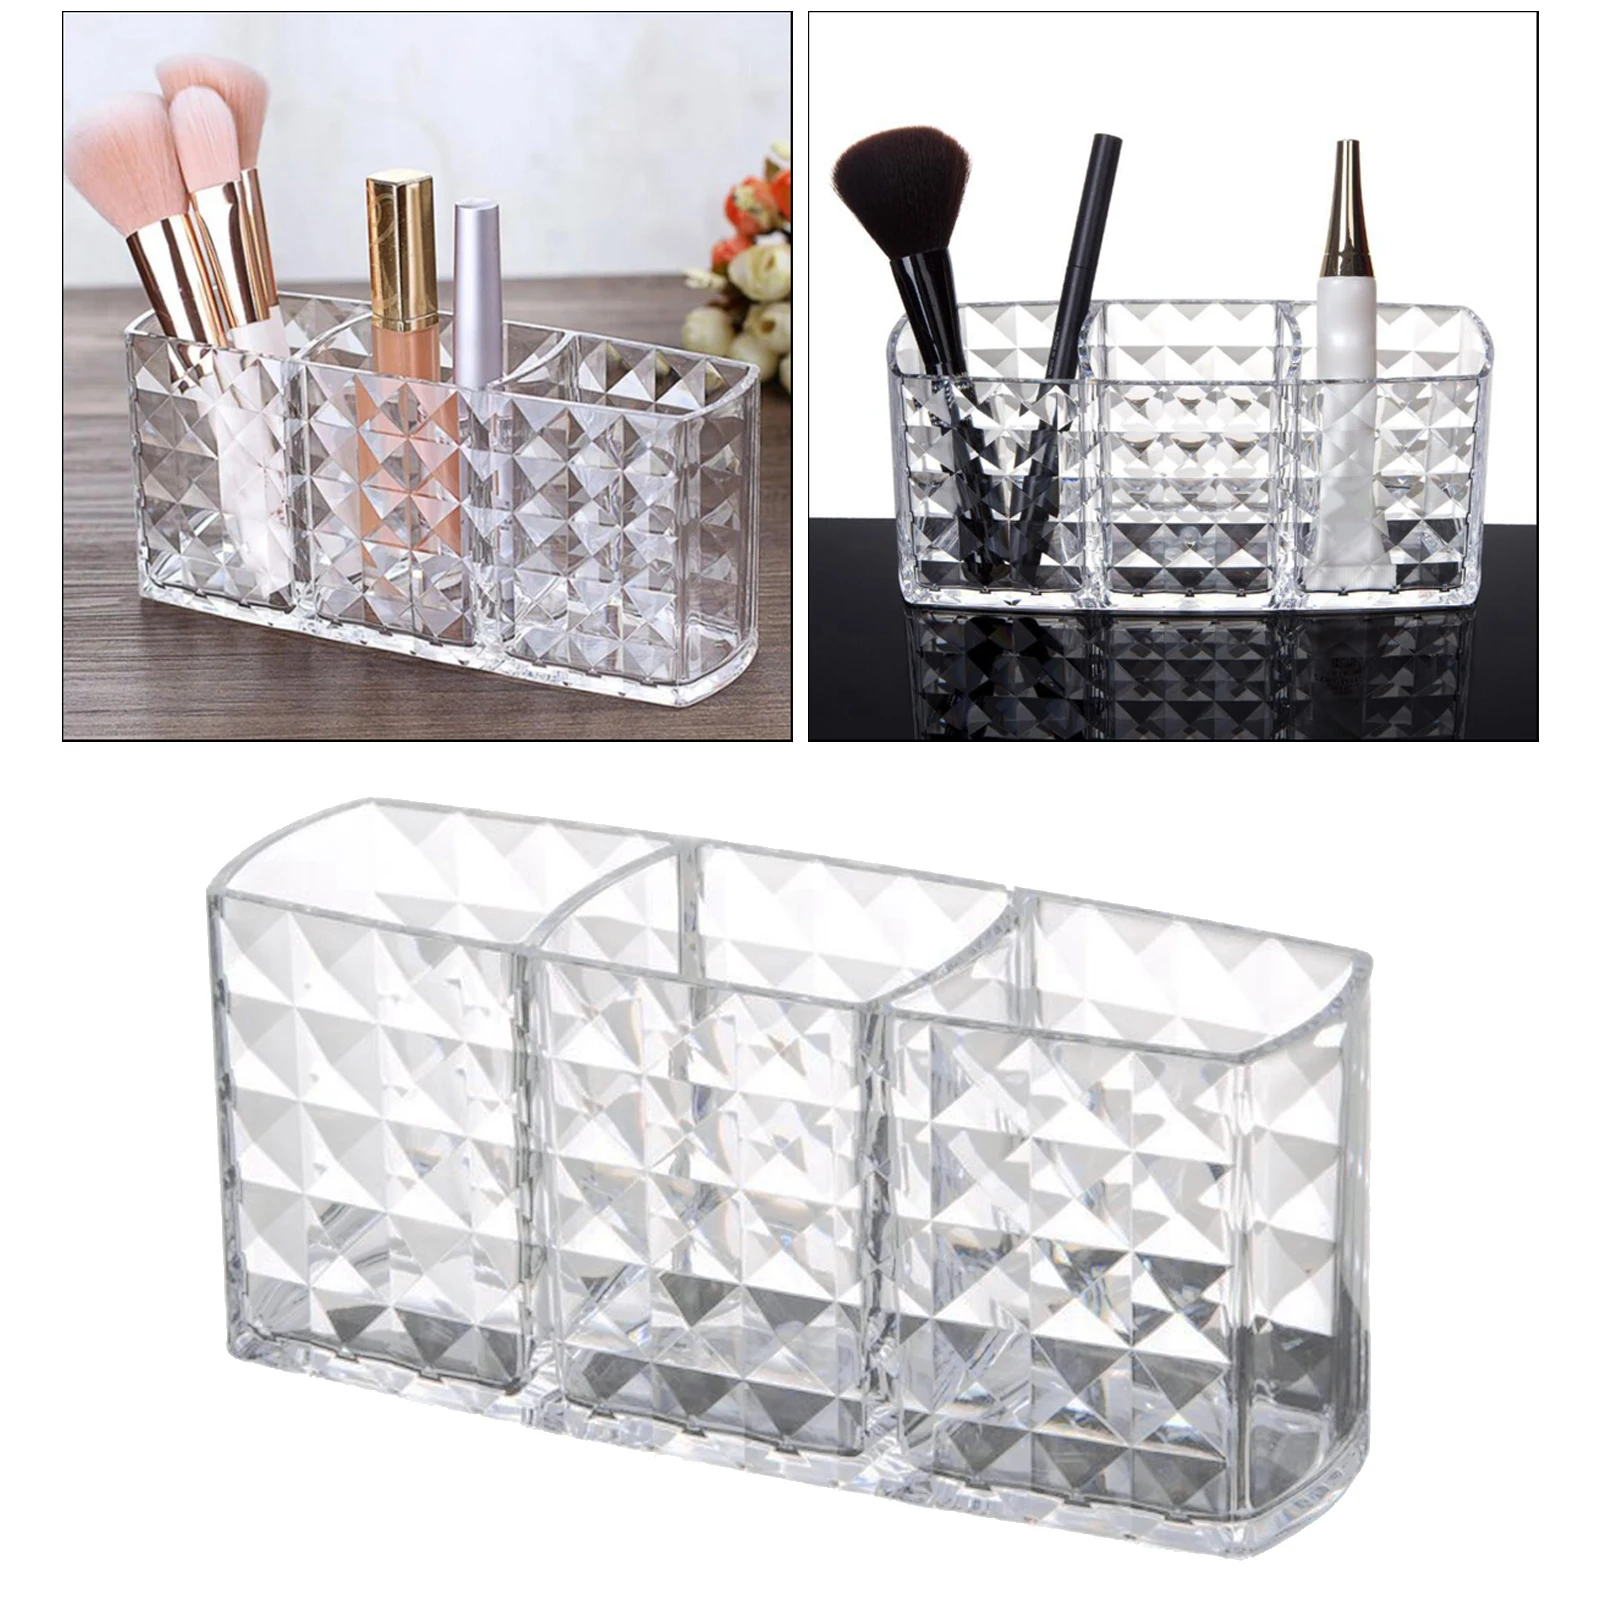 Makeup Brush Holder Organizer Acrylic 3 Grid Make up Cosmetic Brushes Holder Makeup Brush Lipsticks Container Storage Case